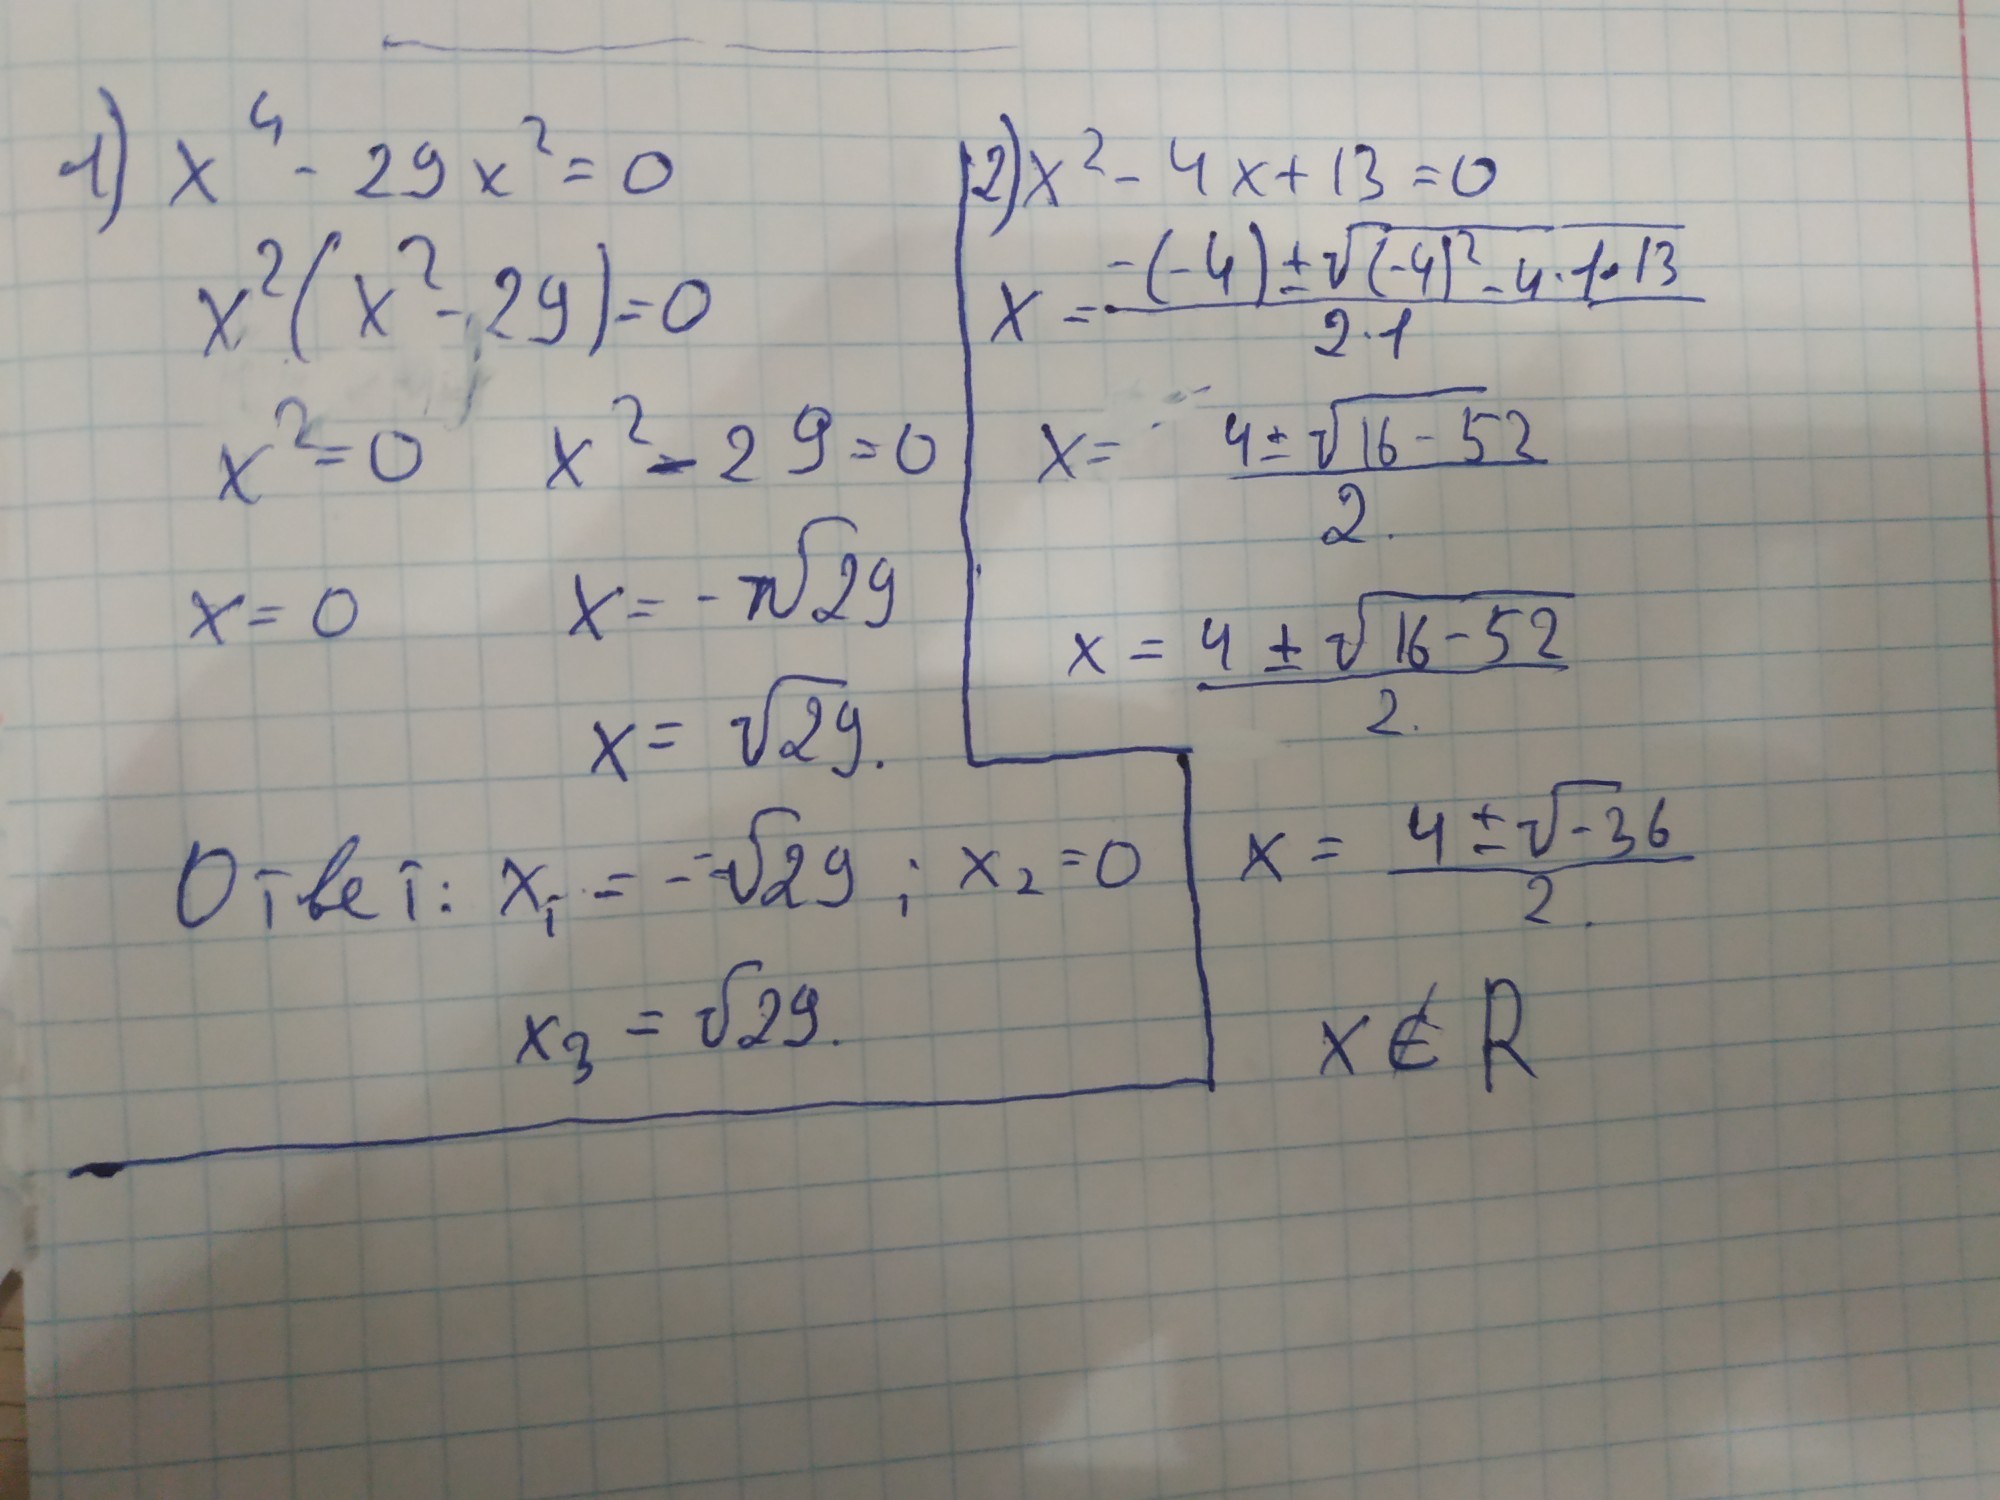 4x2 4x 3 0. X2 – 4x + 13 = 0 комплексные. (X + 4)*(X - 13)^2 <= 0. X2 4x 13 0 комплексные числа решение. X2-2,4x-13=0.